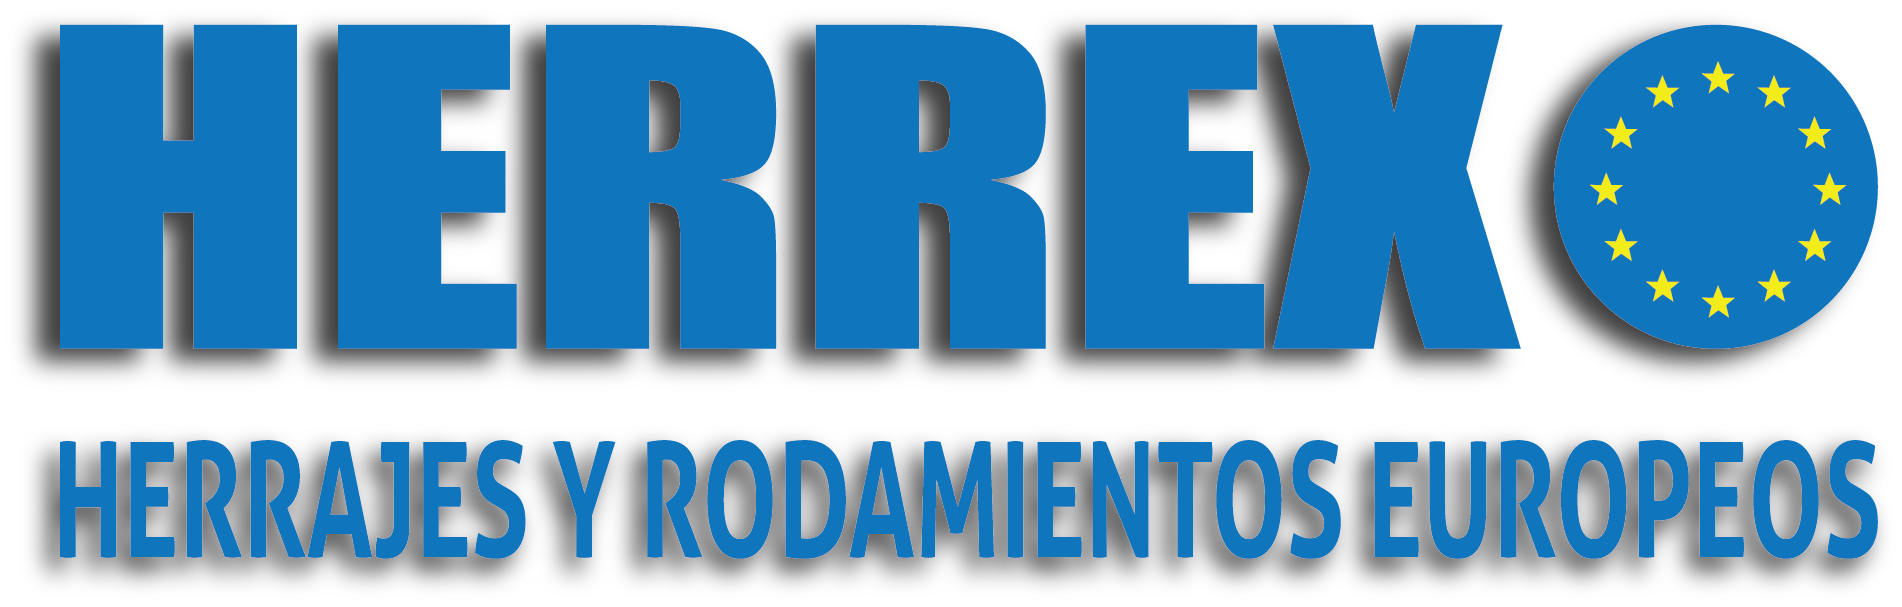 logo herrex (2)